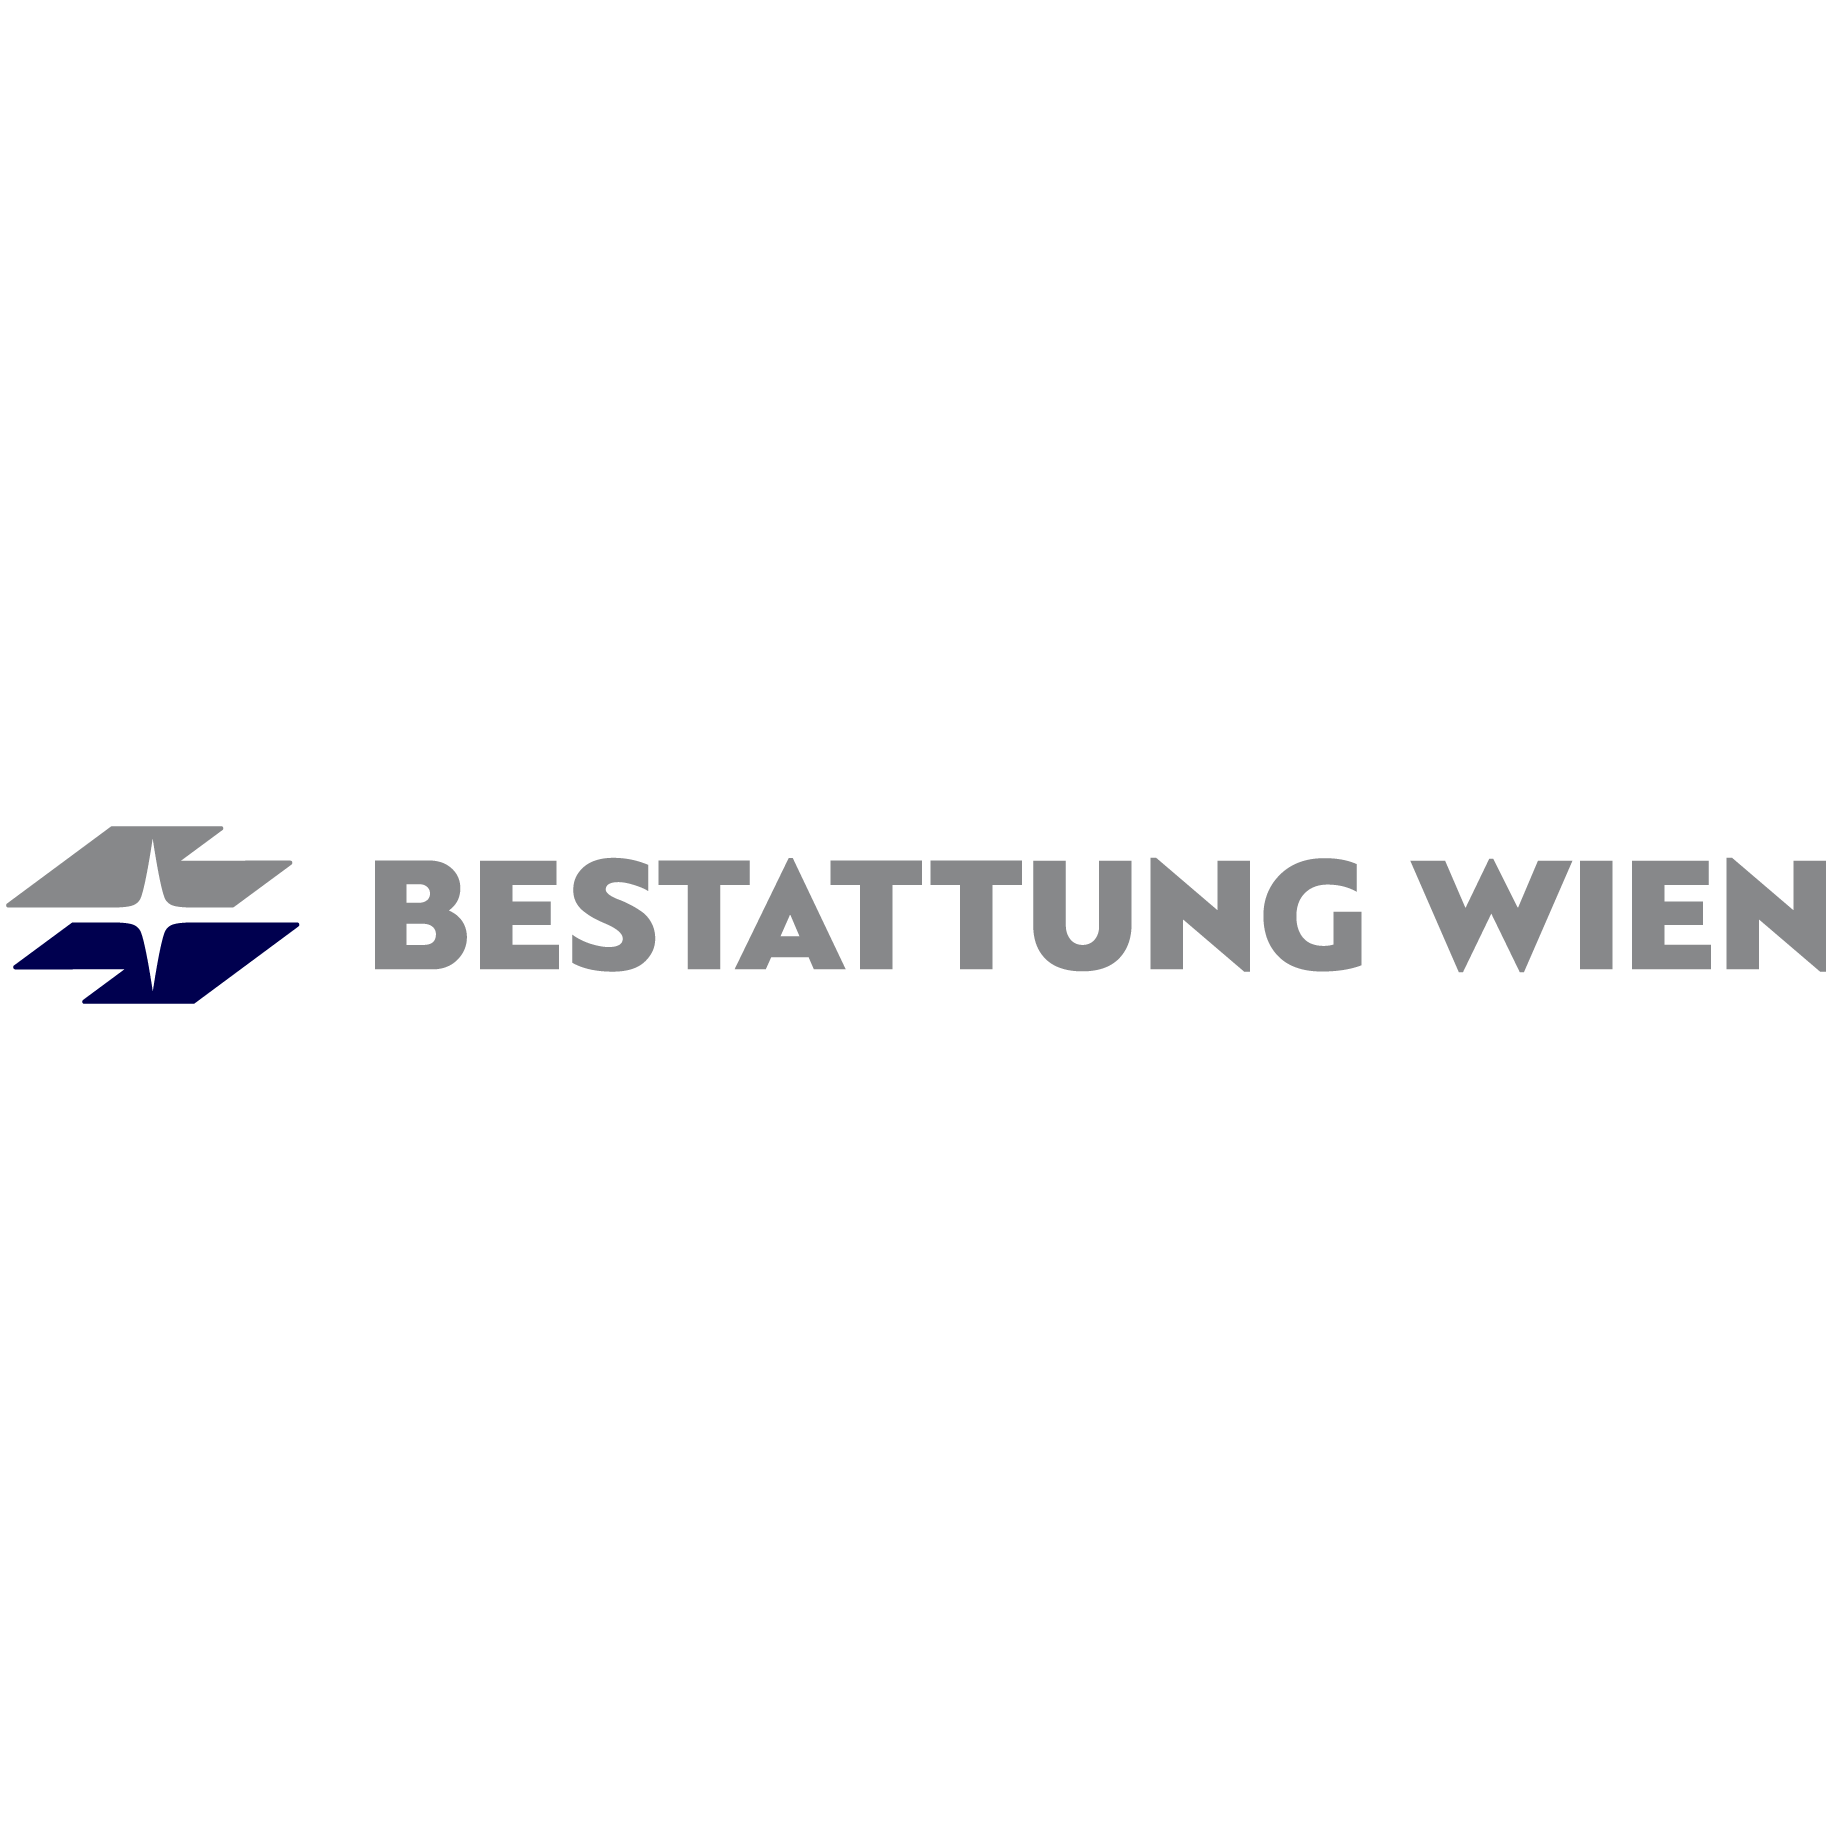 BESTATTUNG WIEN - Kundenservice Floridsdorf Logo